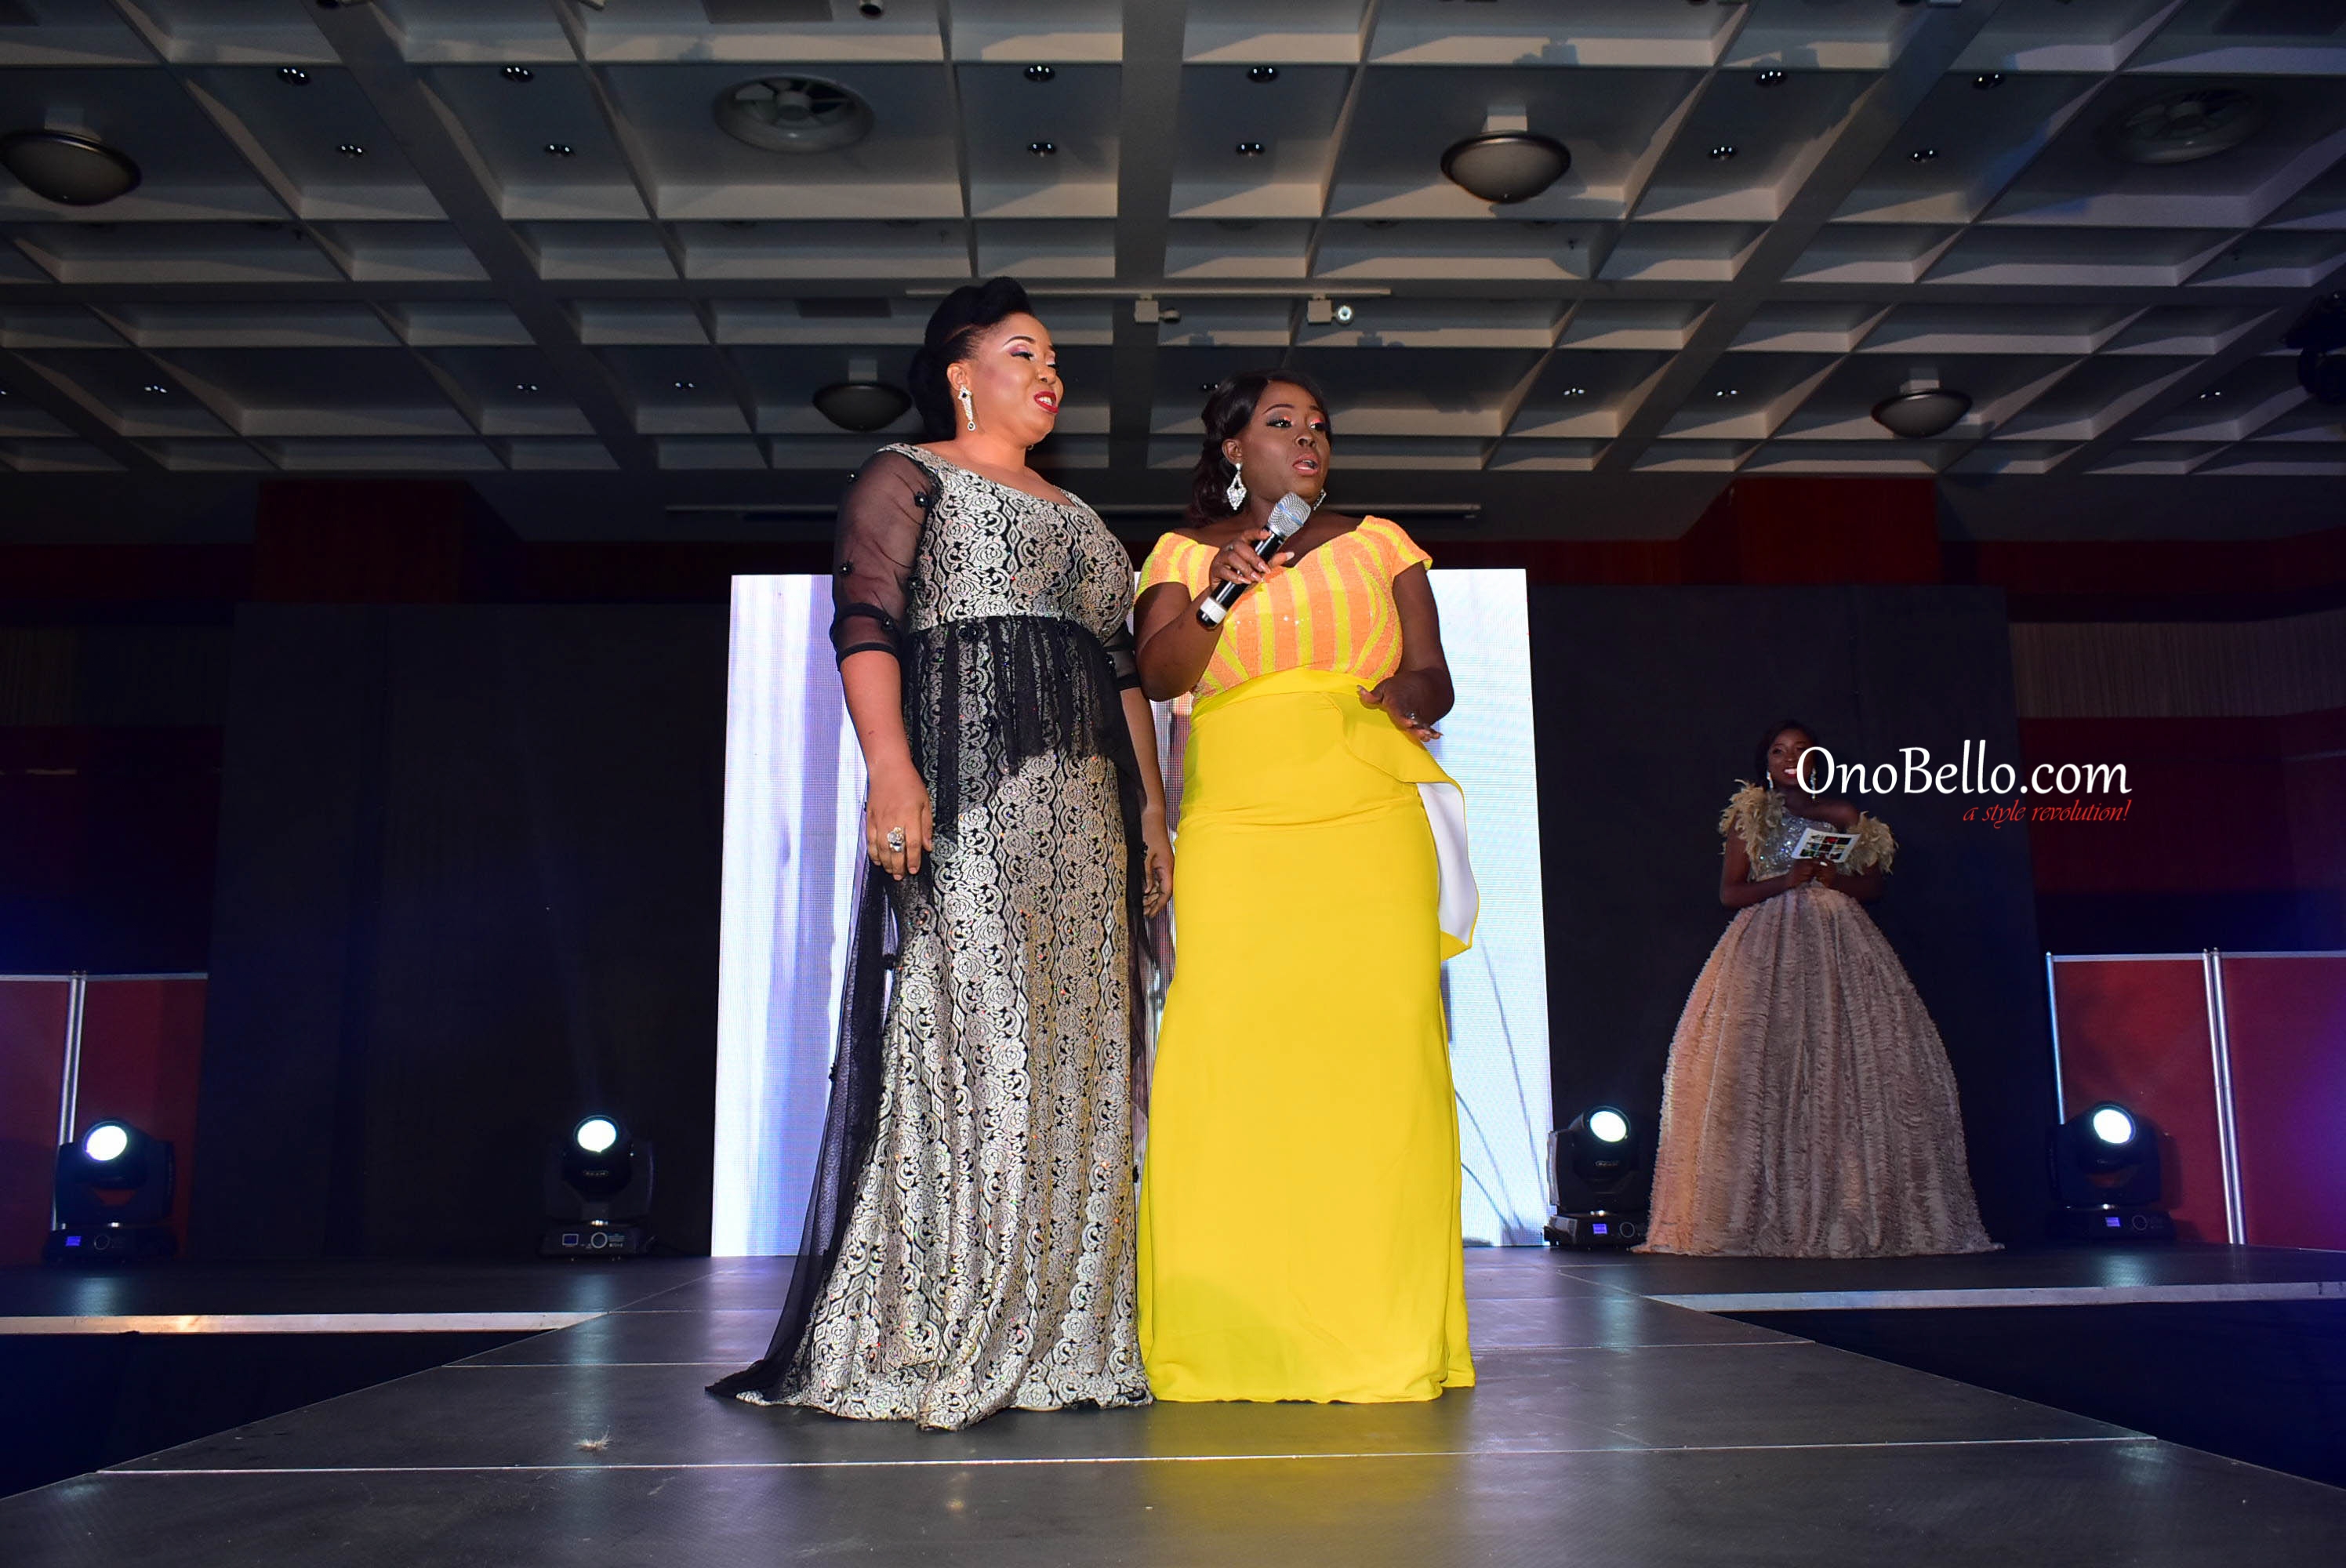 Red Carpet Glam! Osas Ighodaro Ajibade, Lanre DaSilva Ajayi, More Attend The 2017 ELOY Awards